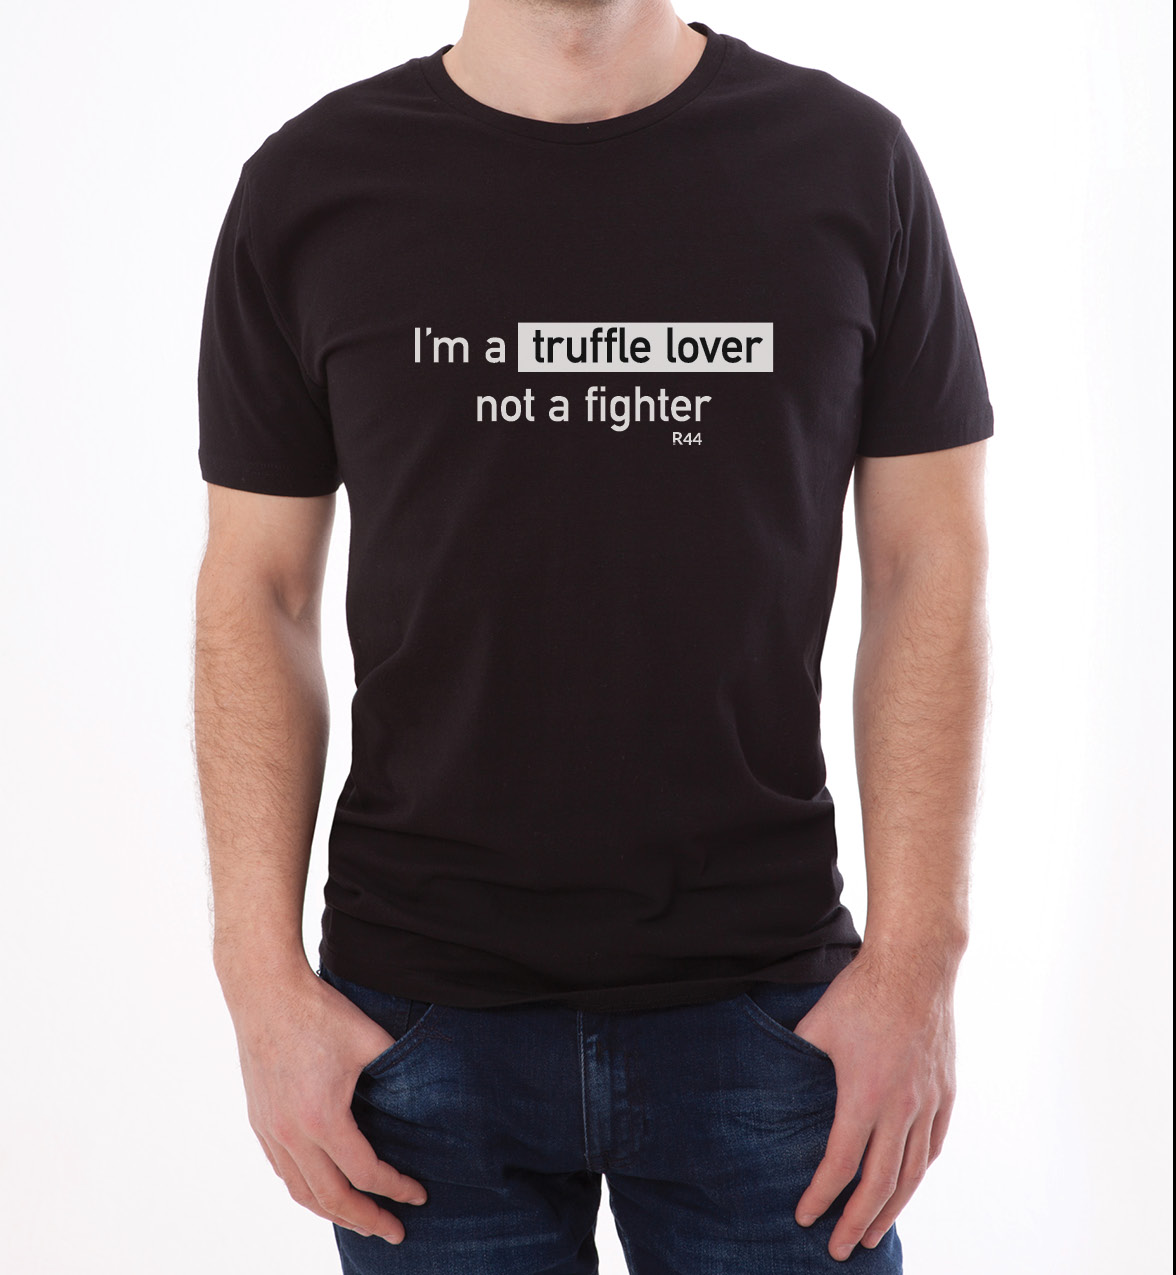 Truffle T-Shirt Toronto Canada Order Online